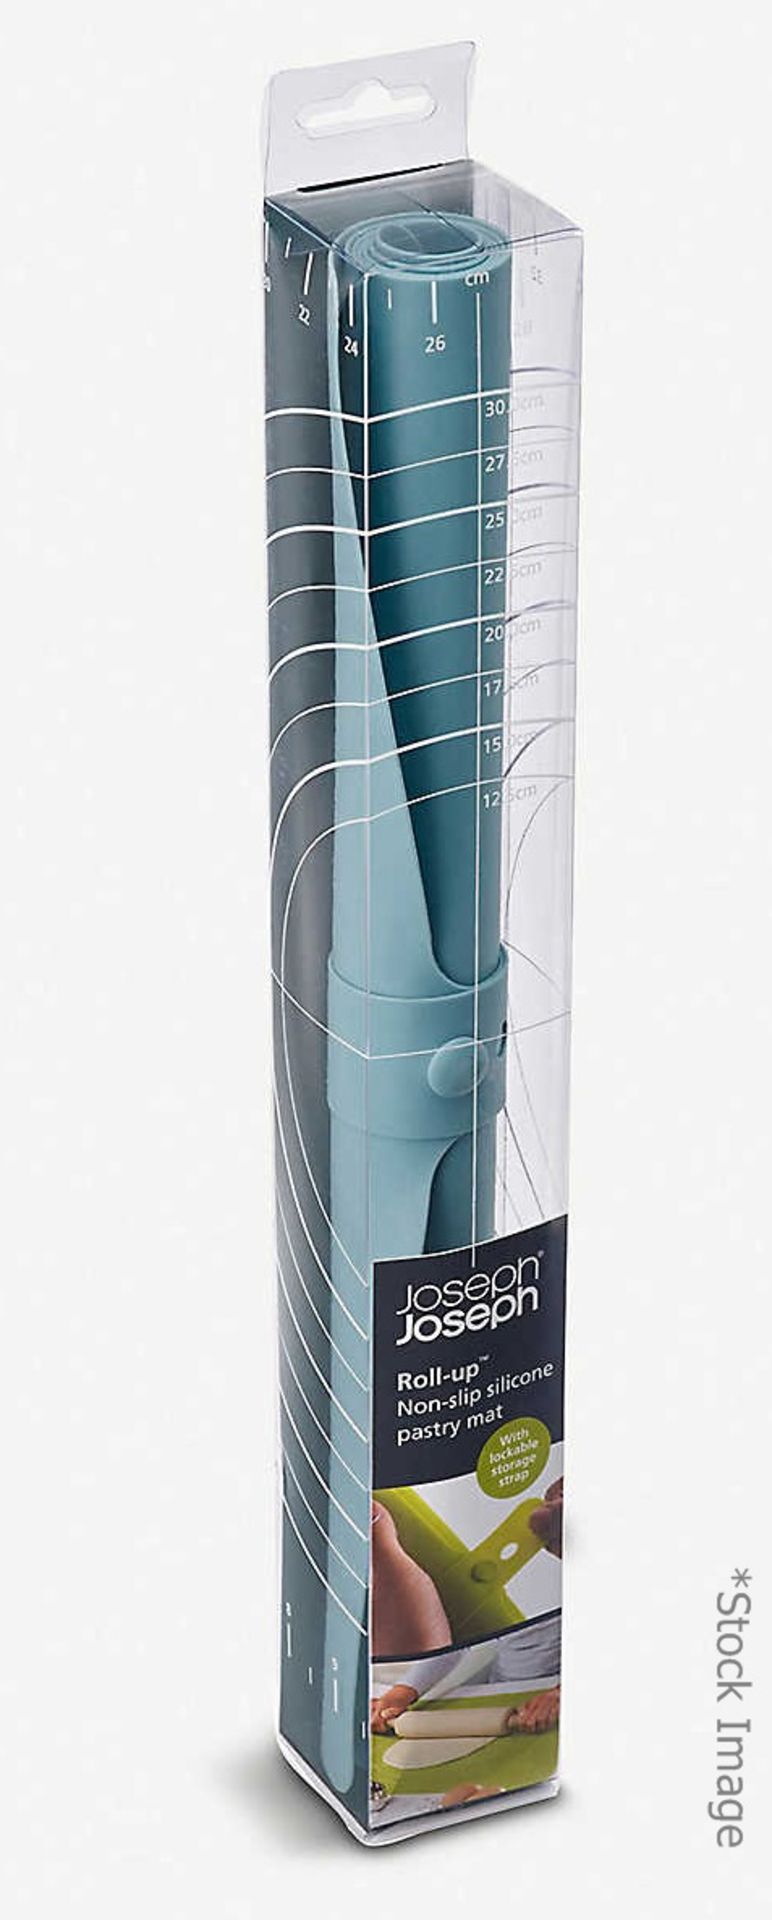 1 x JOSEPH JOSEPH Roll-up Silicone Pastry Mat - Ref: HHW153/NOV21/WH2/C3 - CL987 - Location: